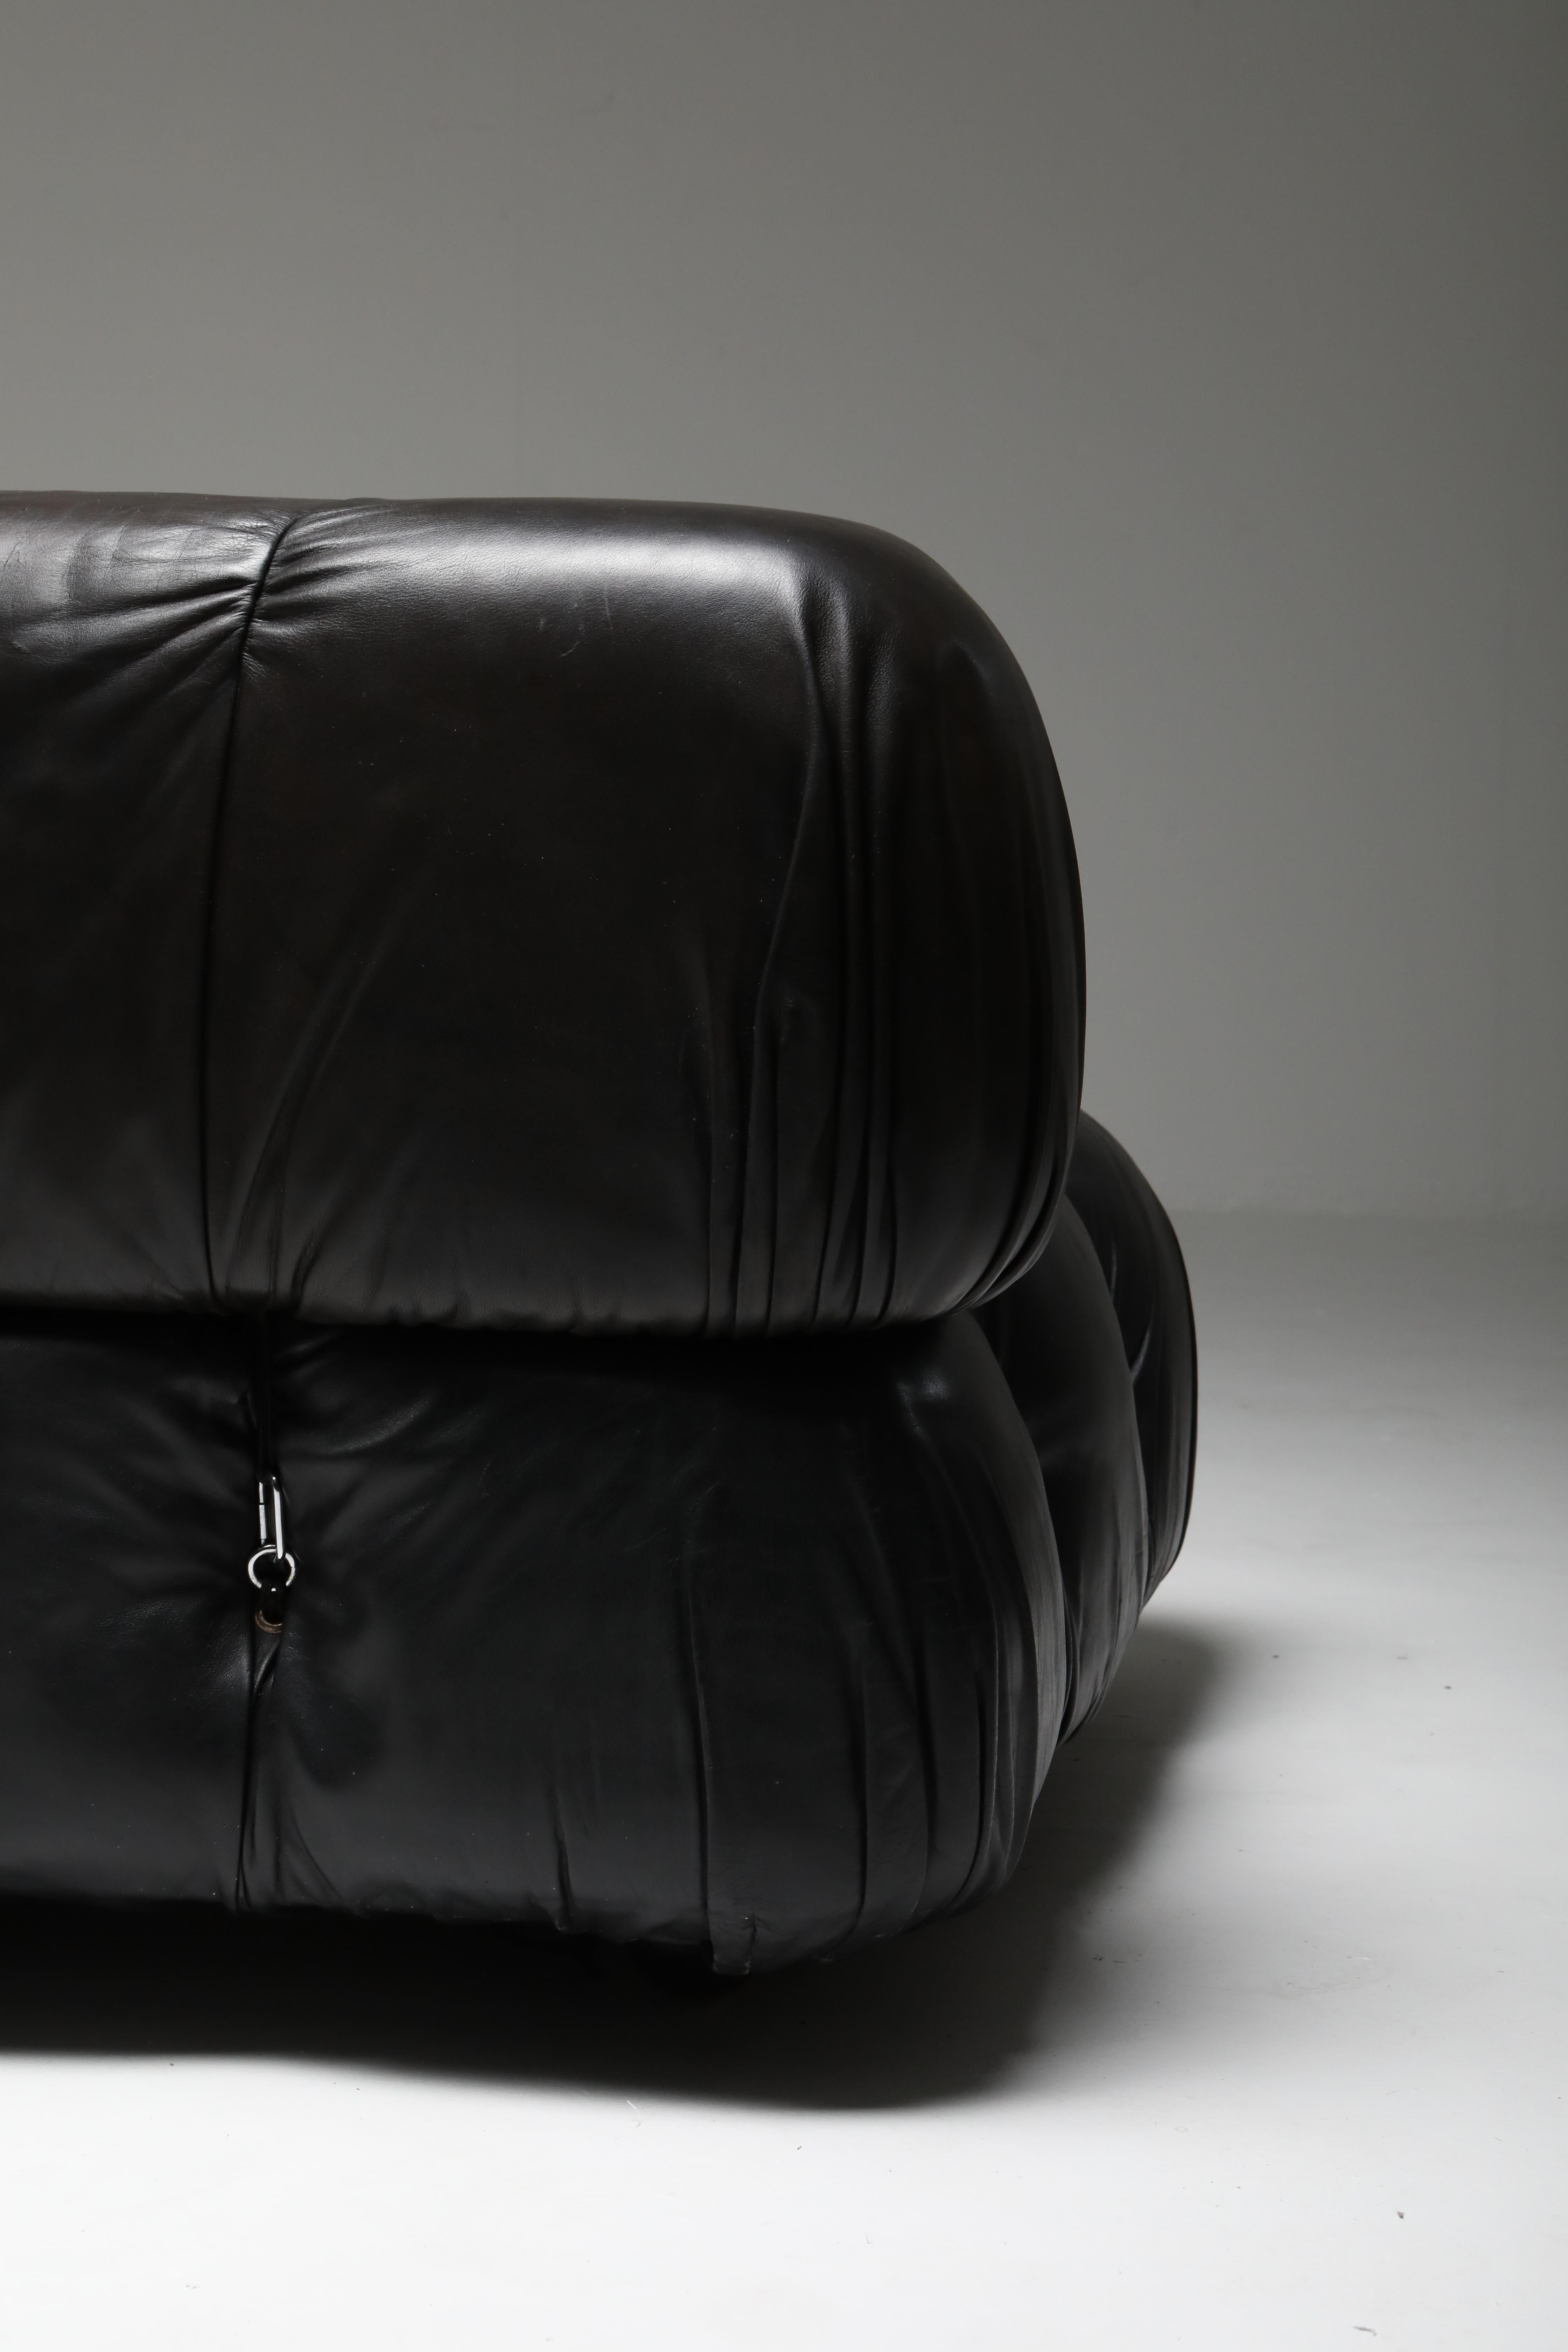 Camaleonda Black Leather Lounge chair 4